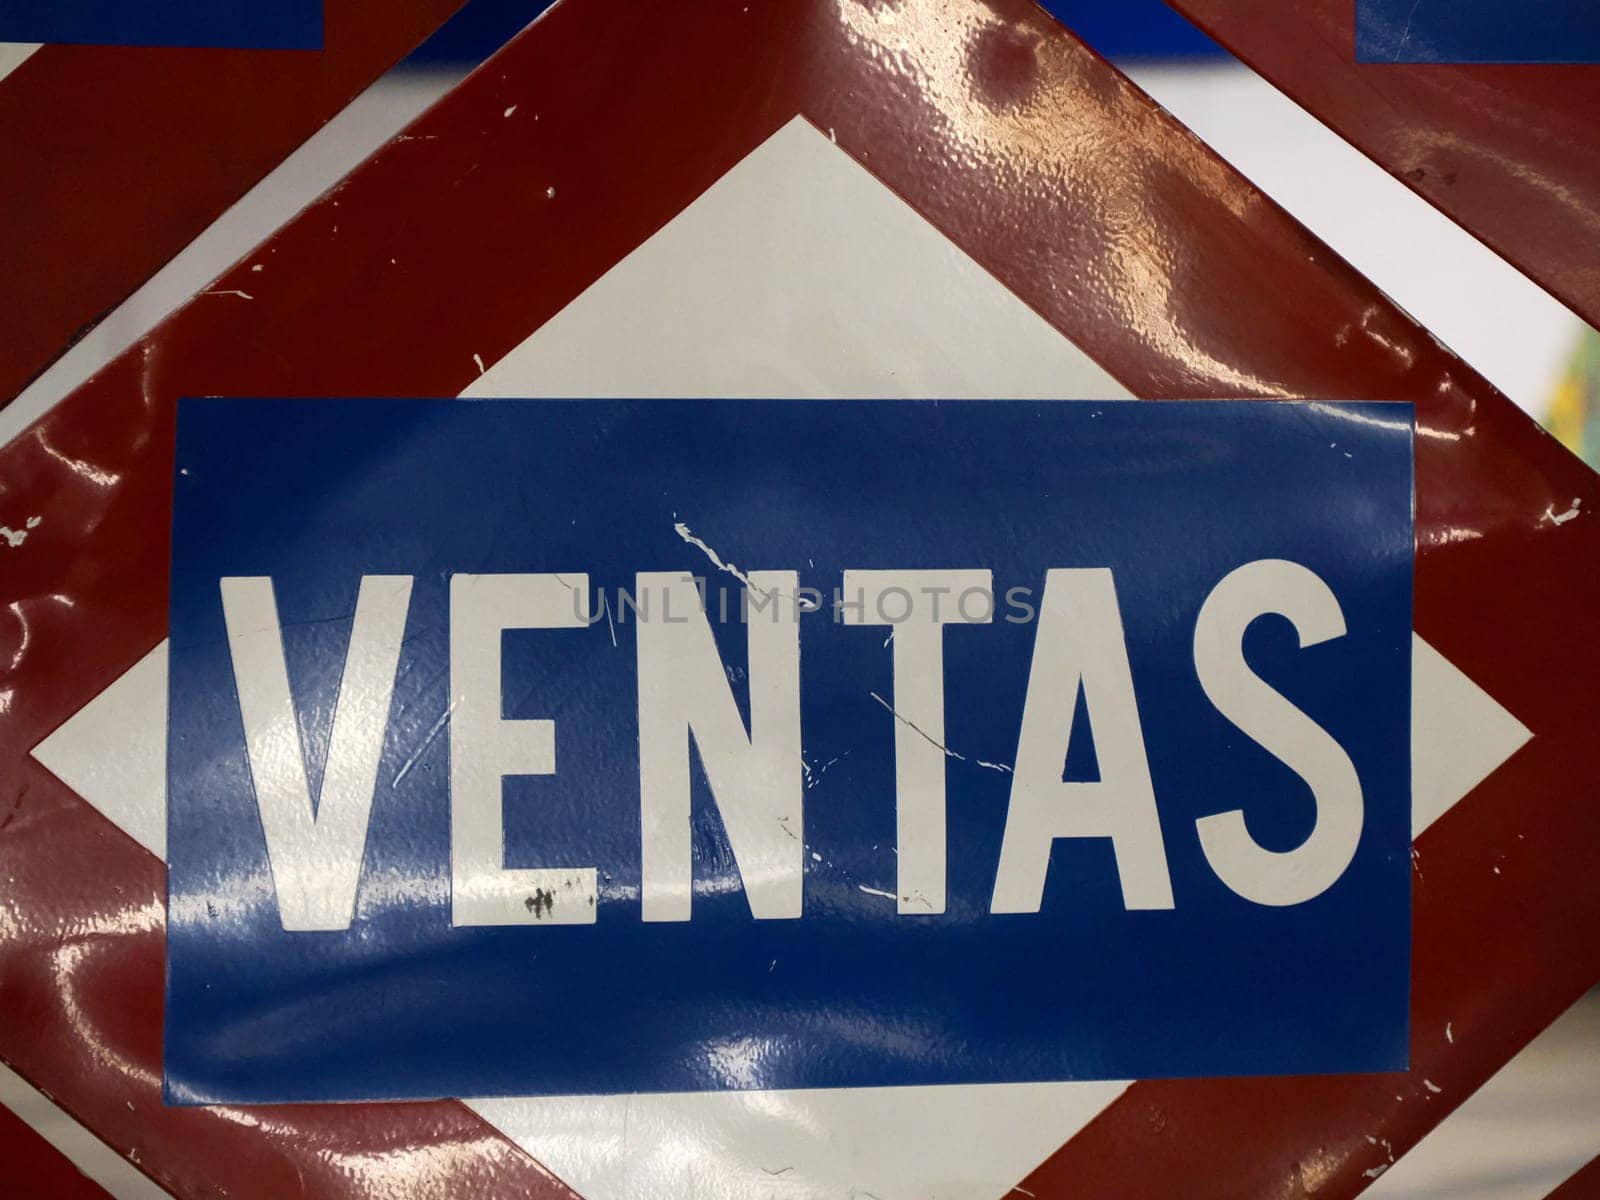 Ventas Metro Station Sign in Madrid Spain detail